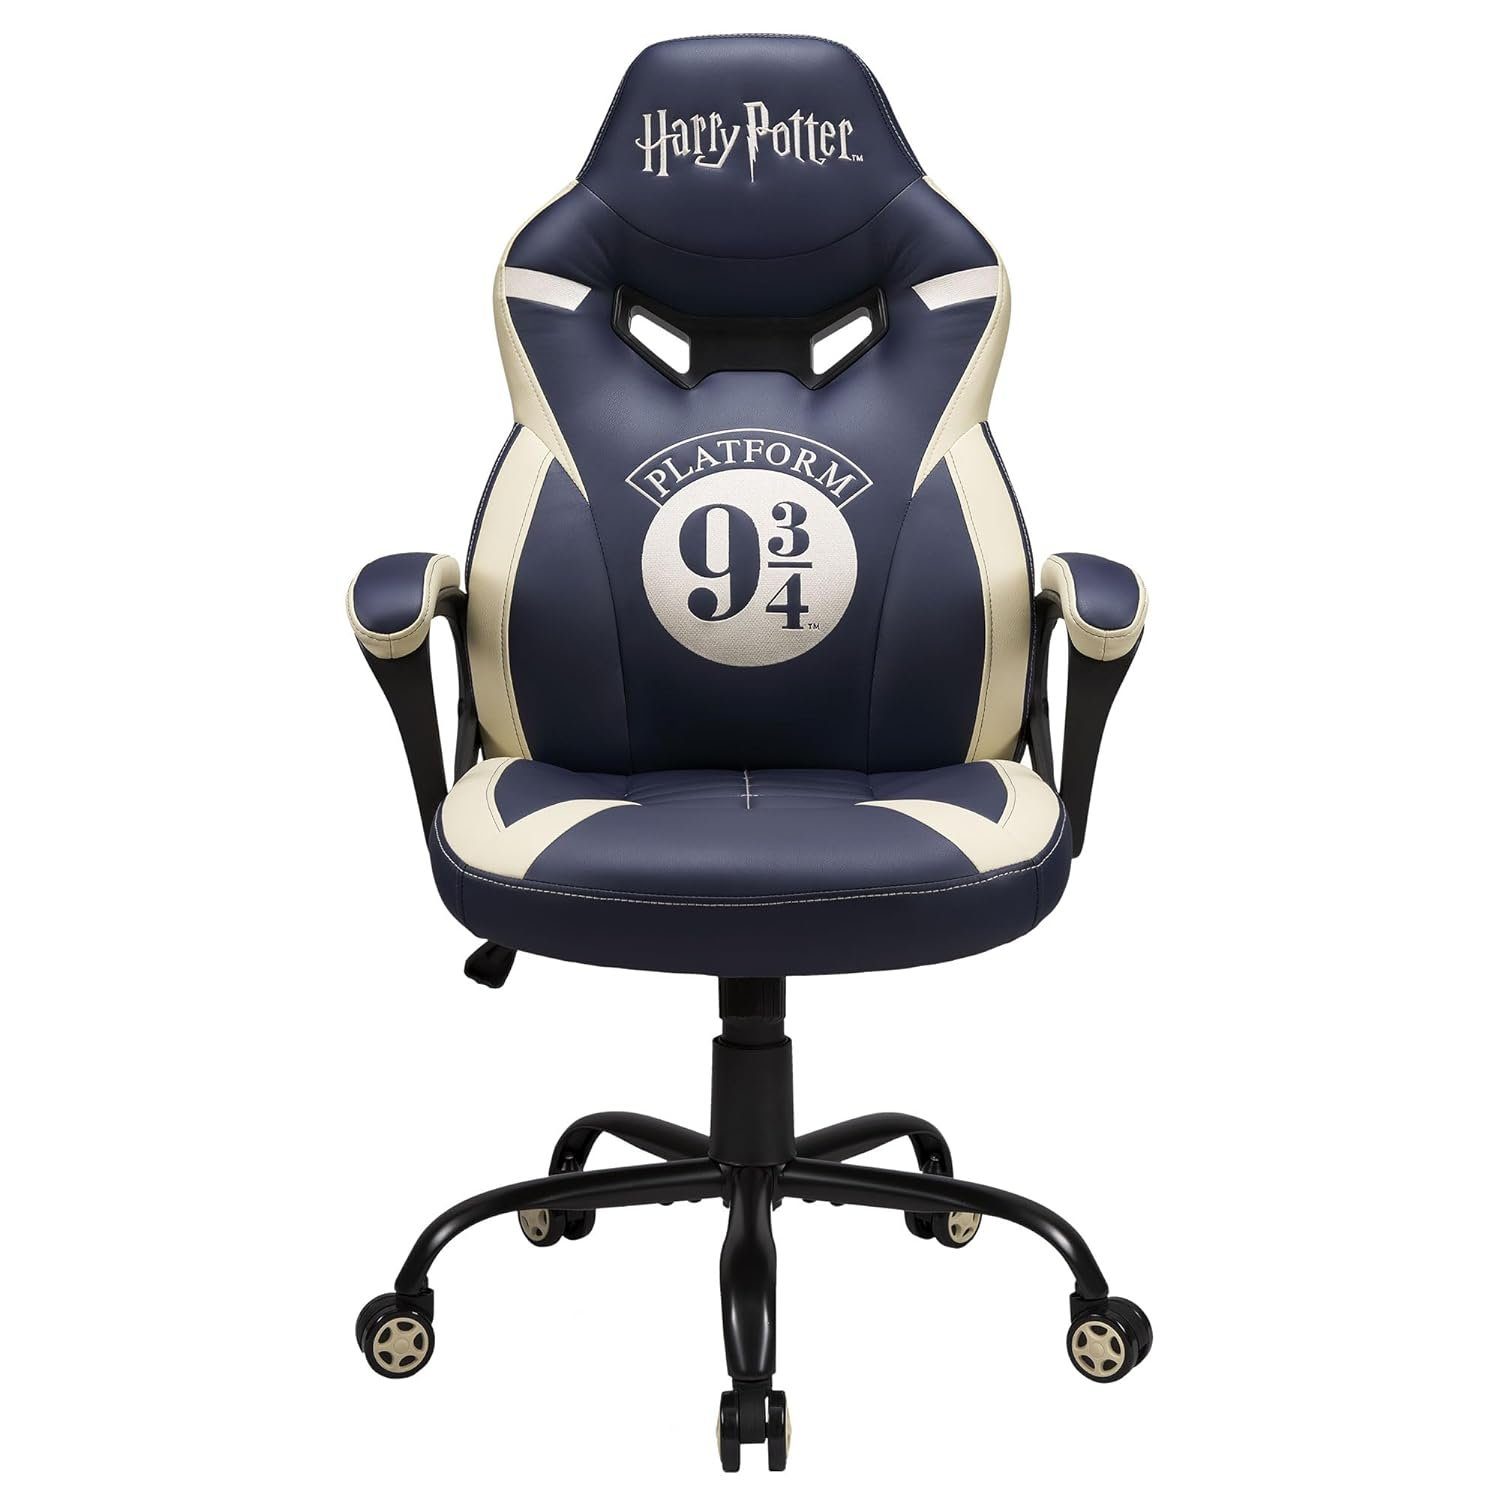 Subsonic Gaming-Stuhl Harry Potter - 9 (1 Gleis / St) Junior Sessel Chair Stuhl - 3/4 / Gaming